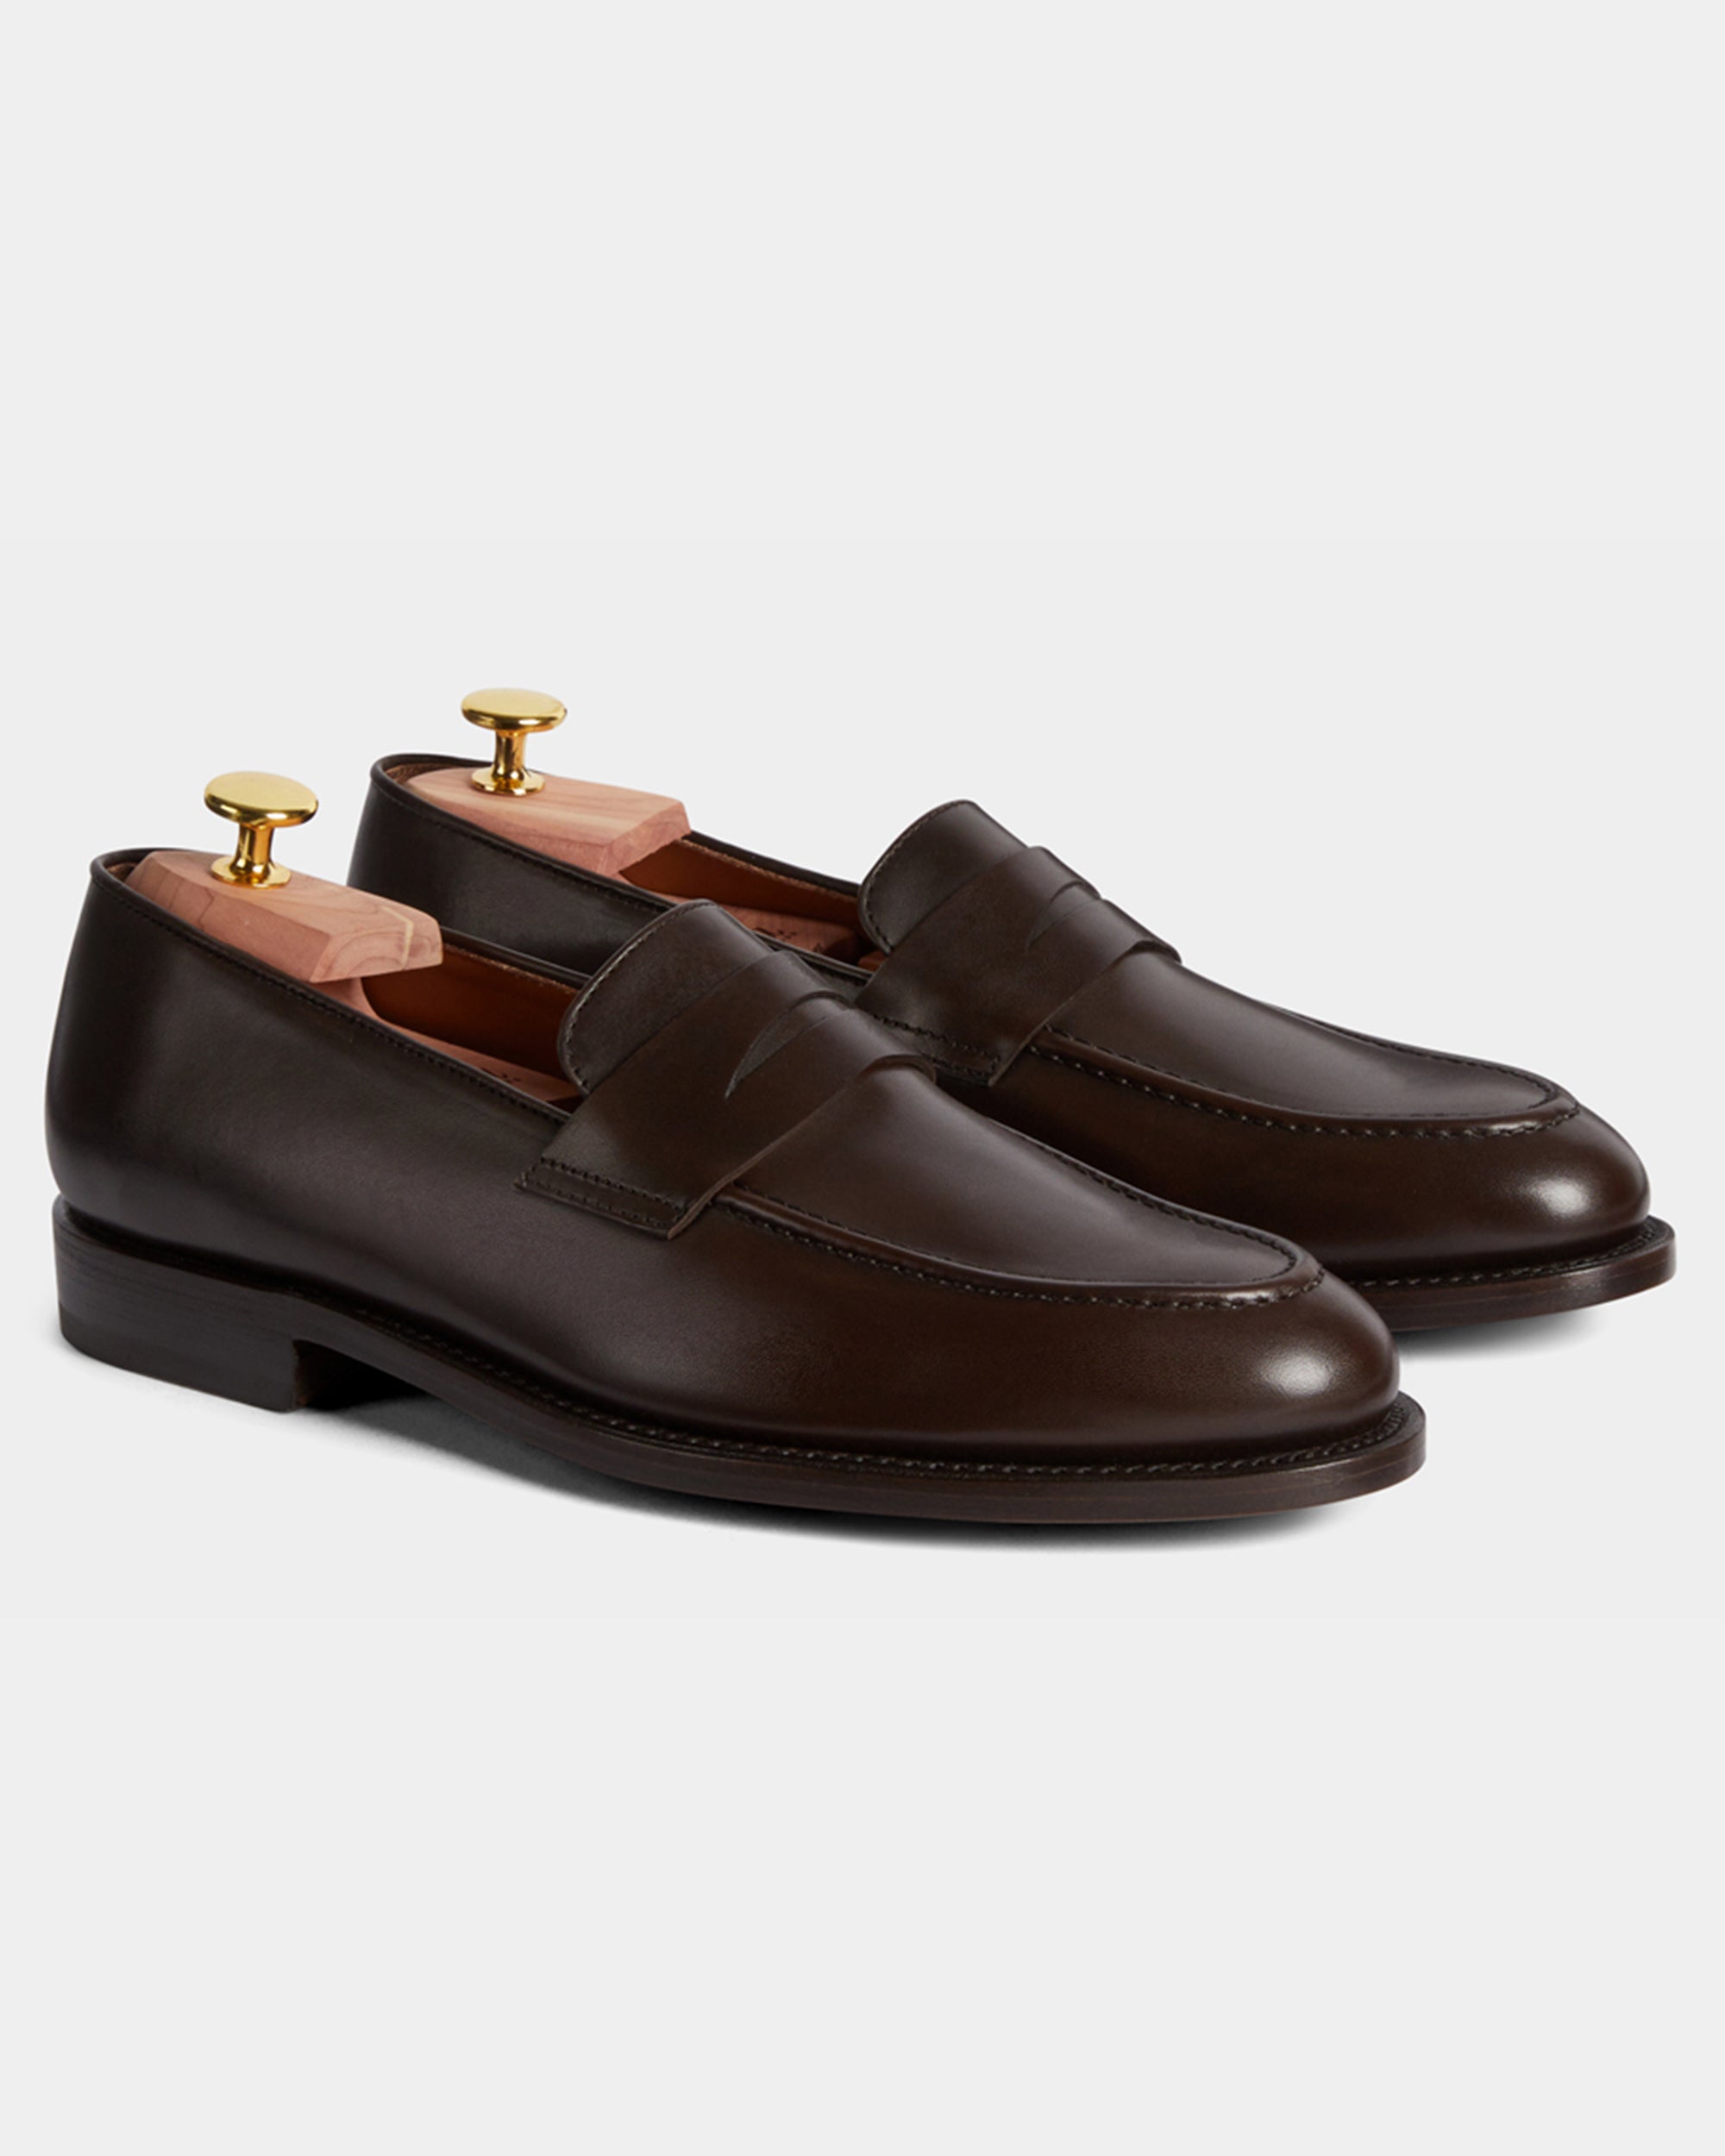 Men's brown leather slip on Loafers | Velasca